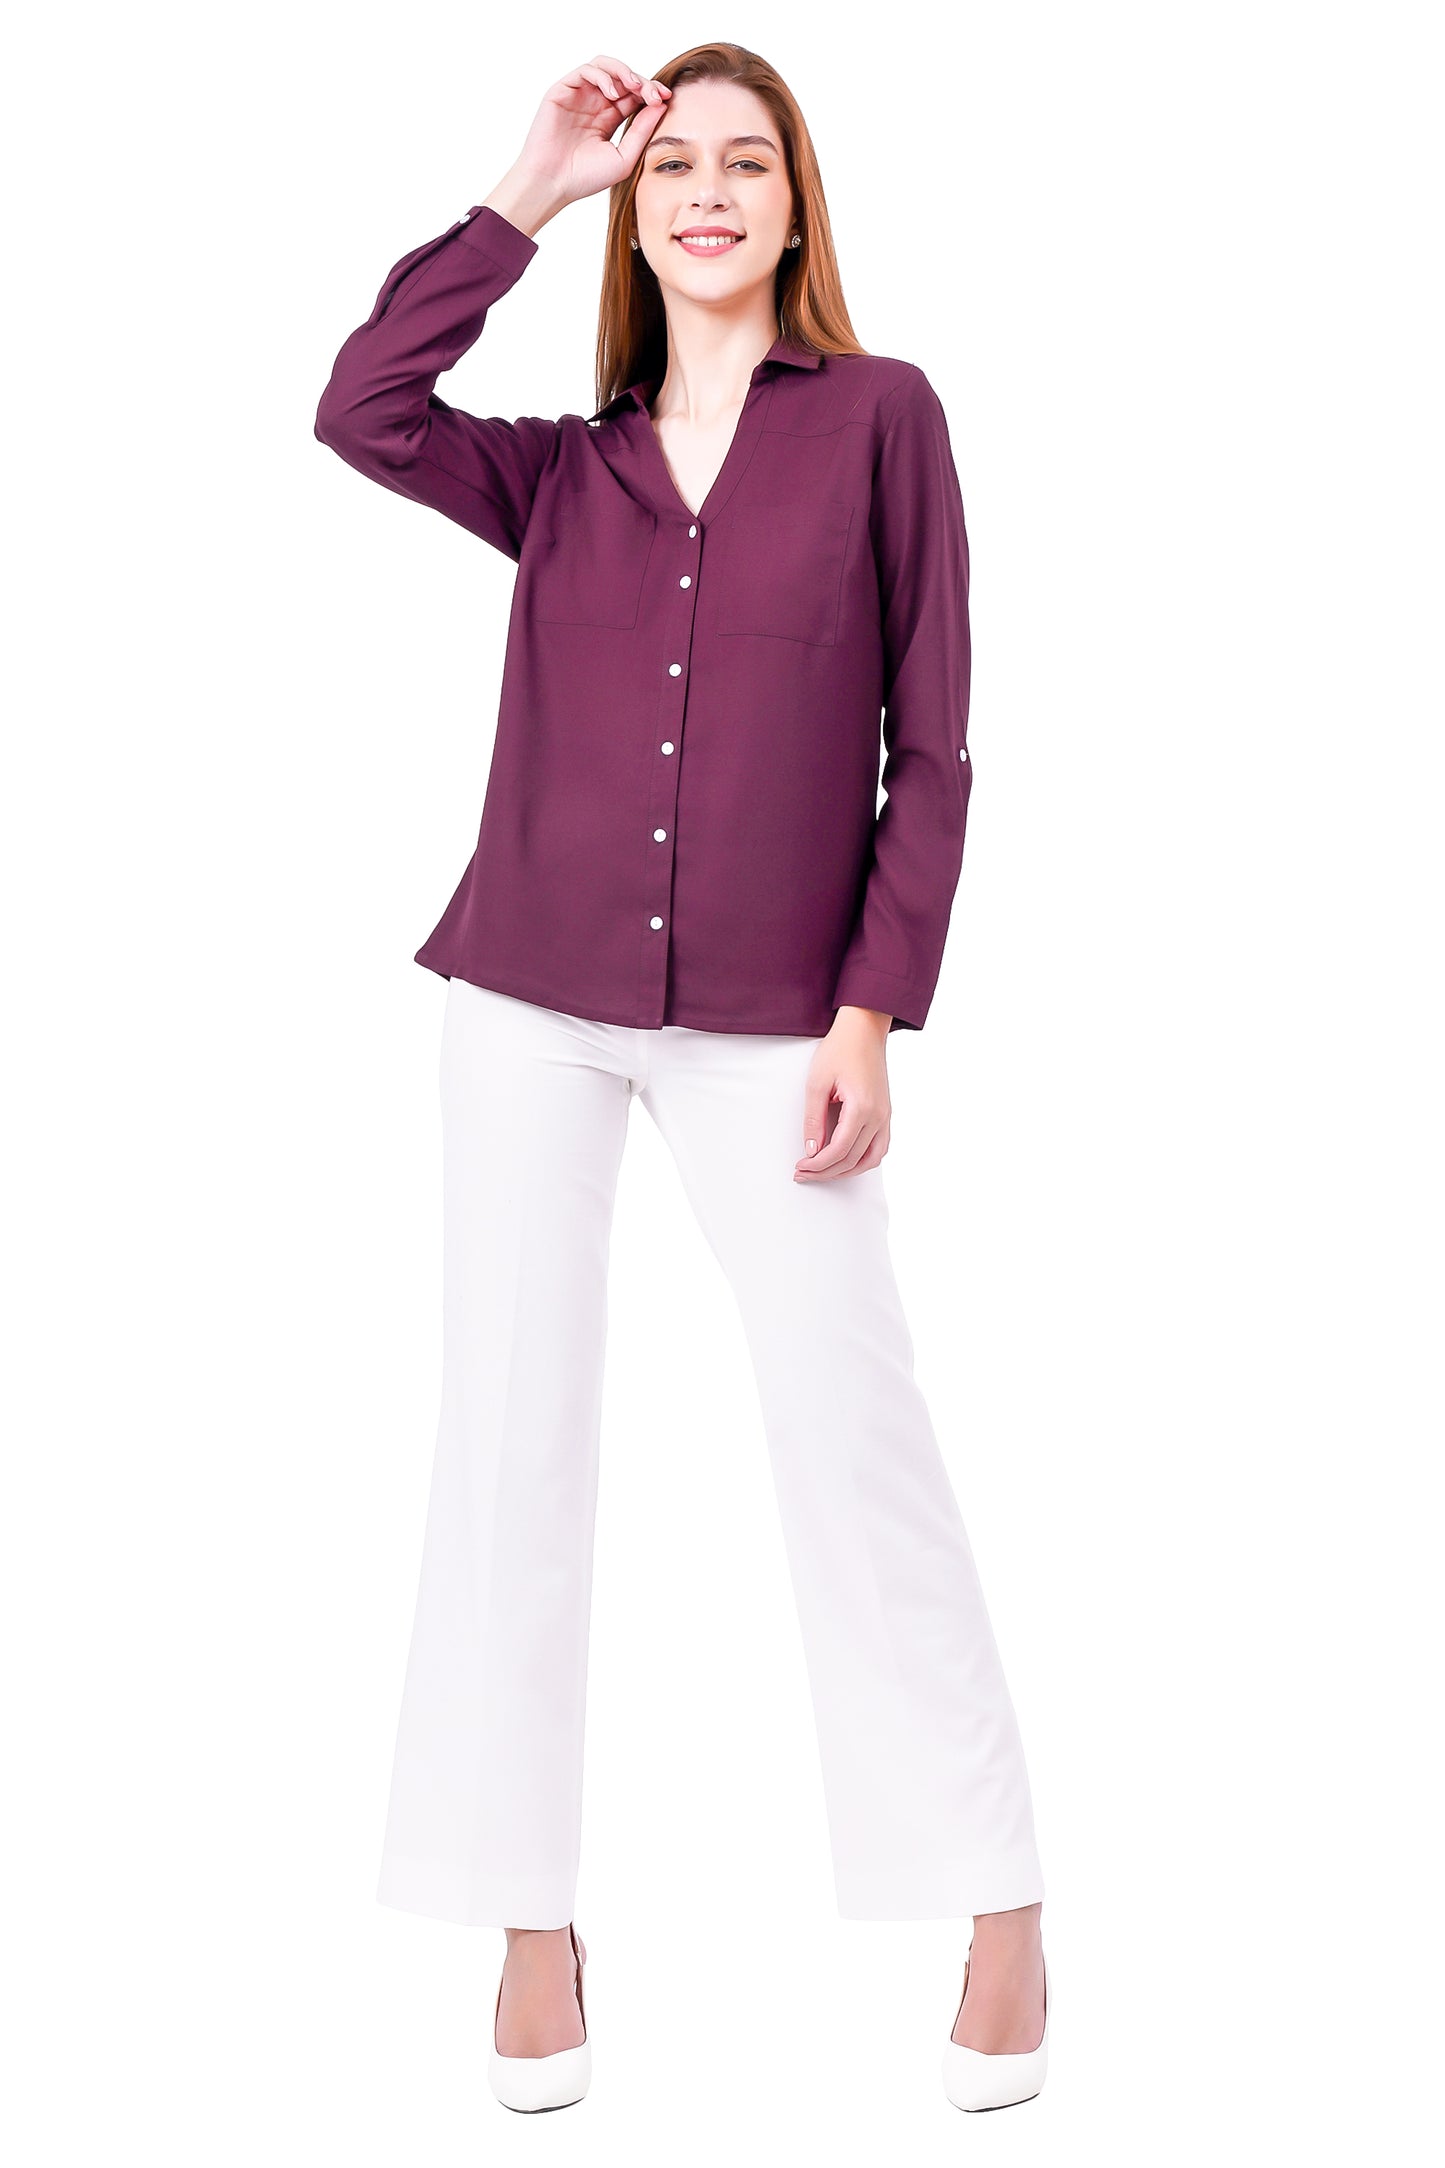 NUEVOSDAMAS Solid Wine Casual/Formal Women Full Sleeve Shirt